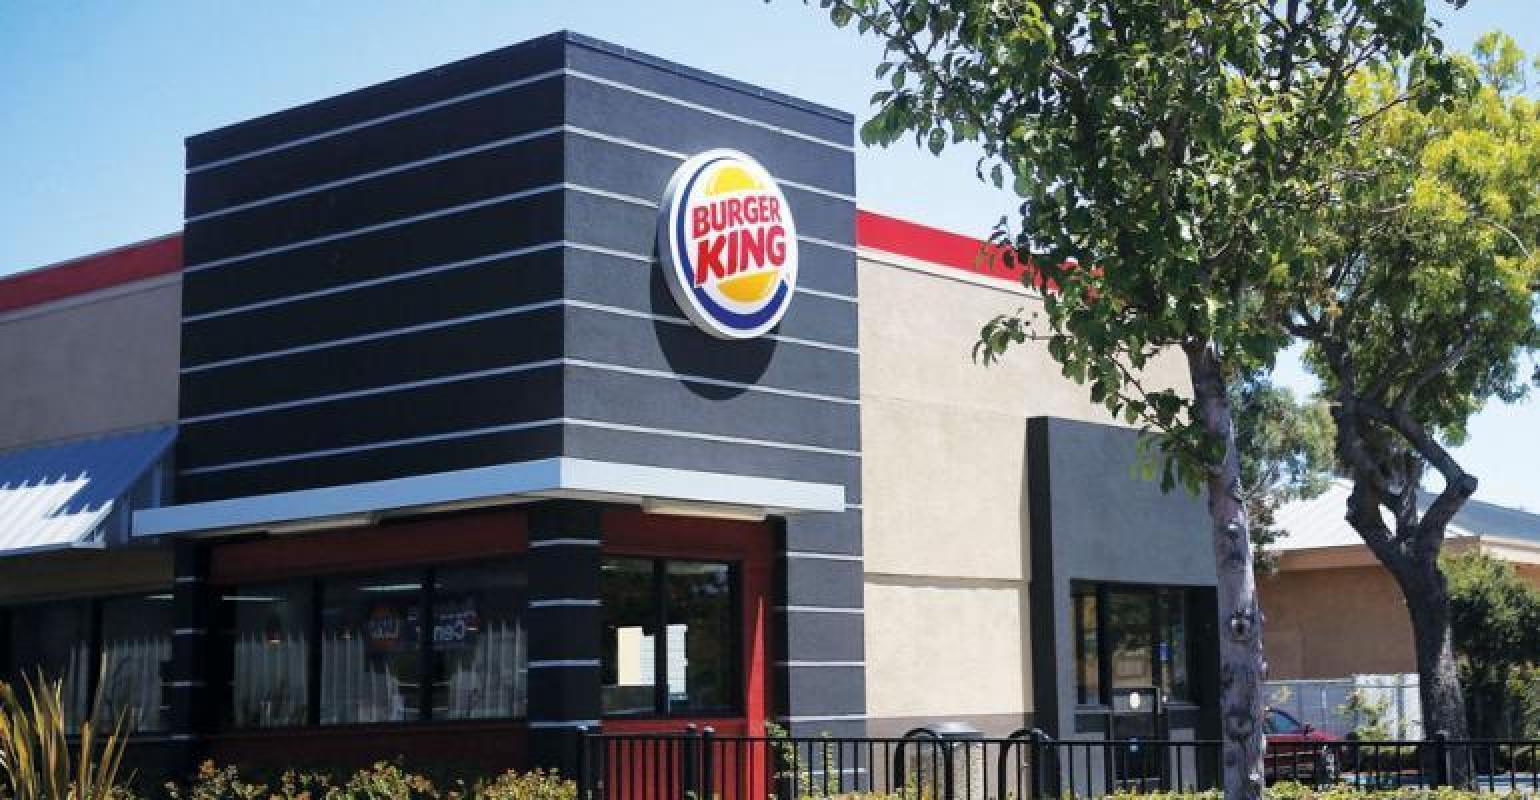 Burger King parent continues digital-sales expansion in Q1